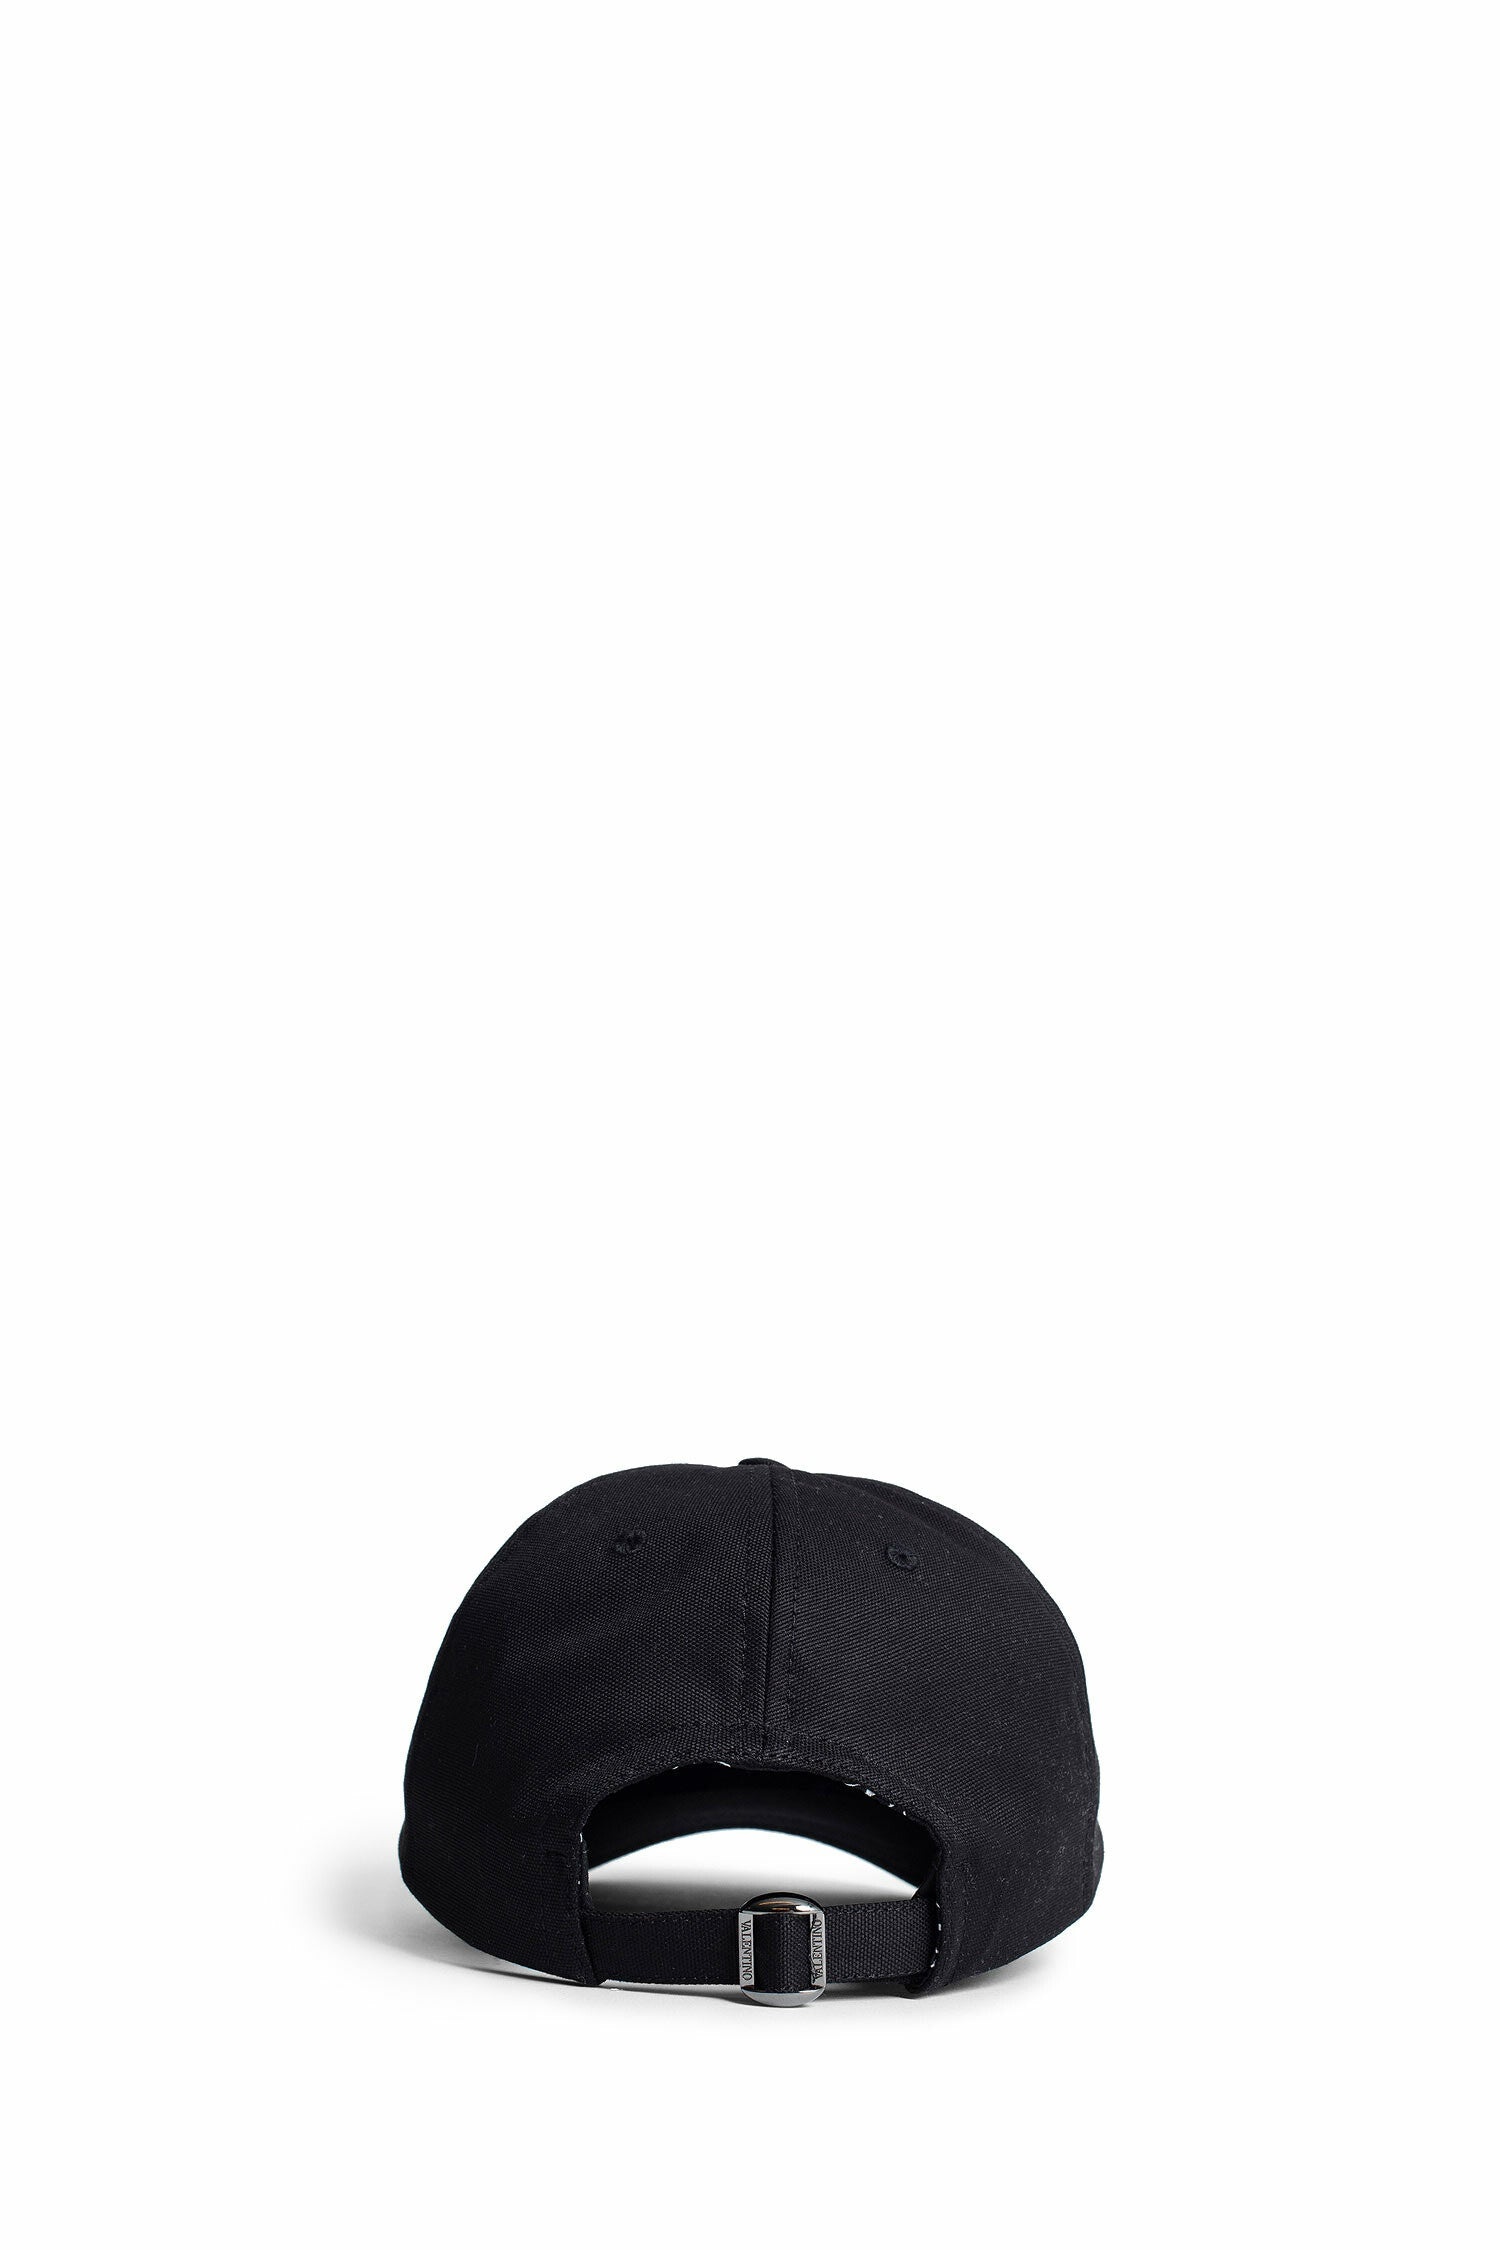 VALENTINO MAN BLACK HATS - 3